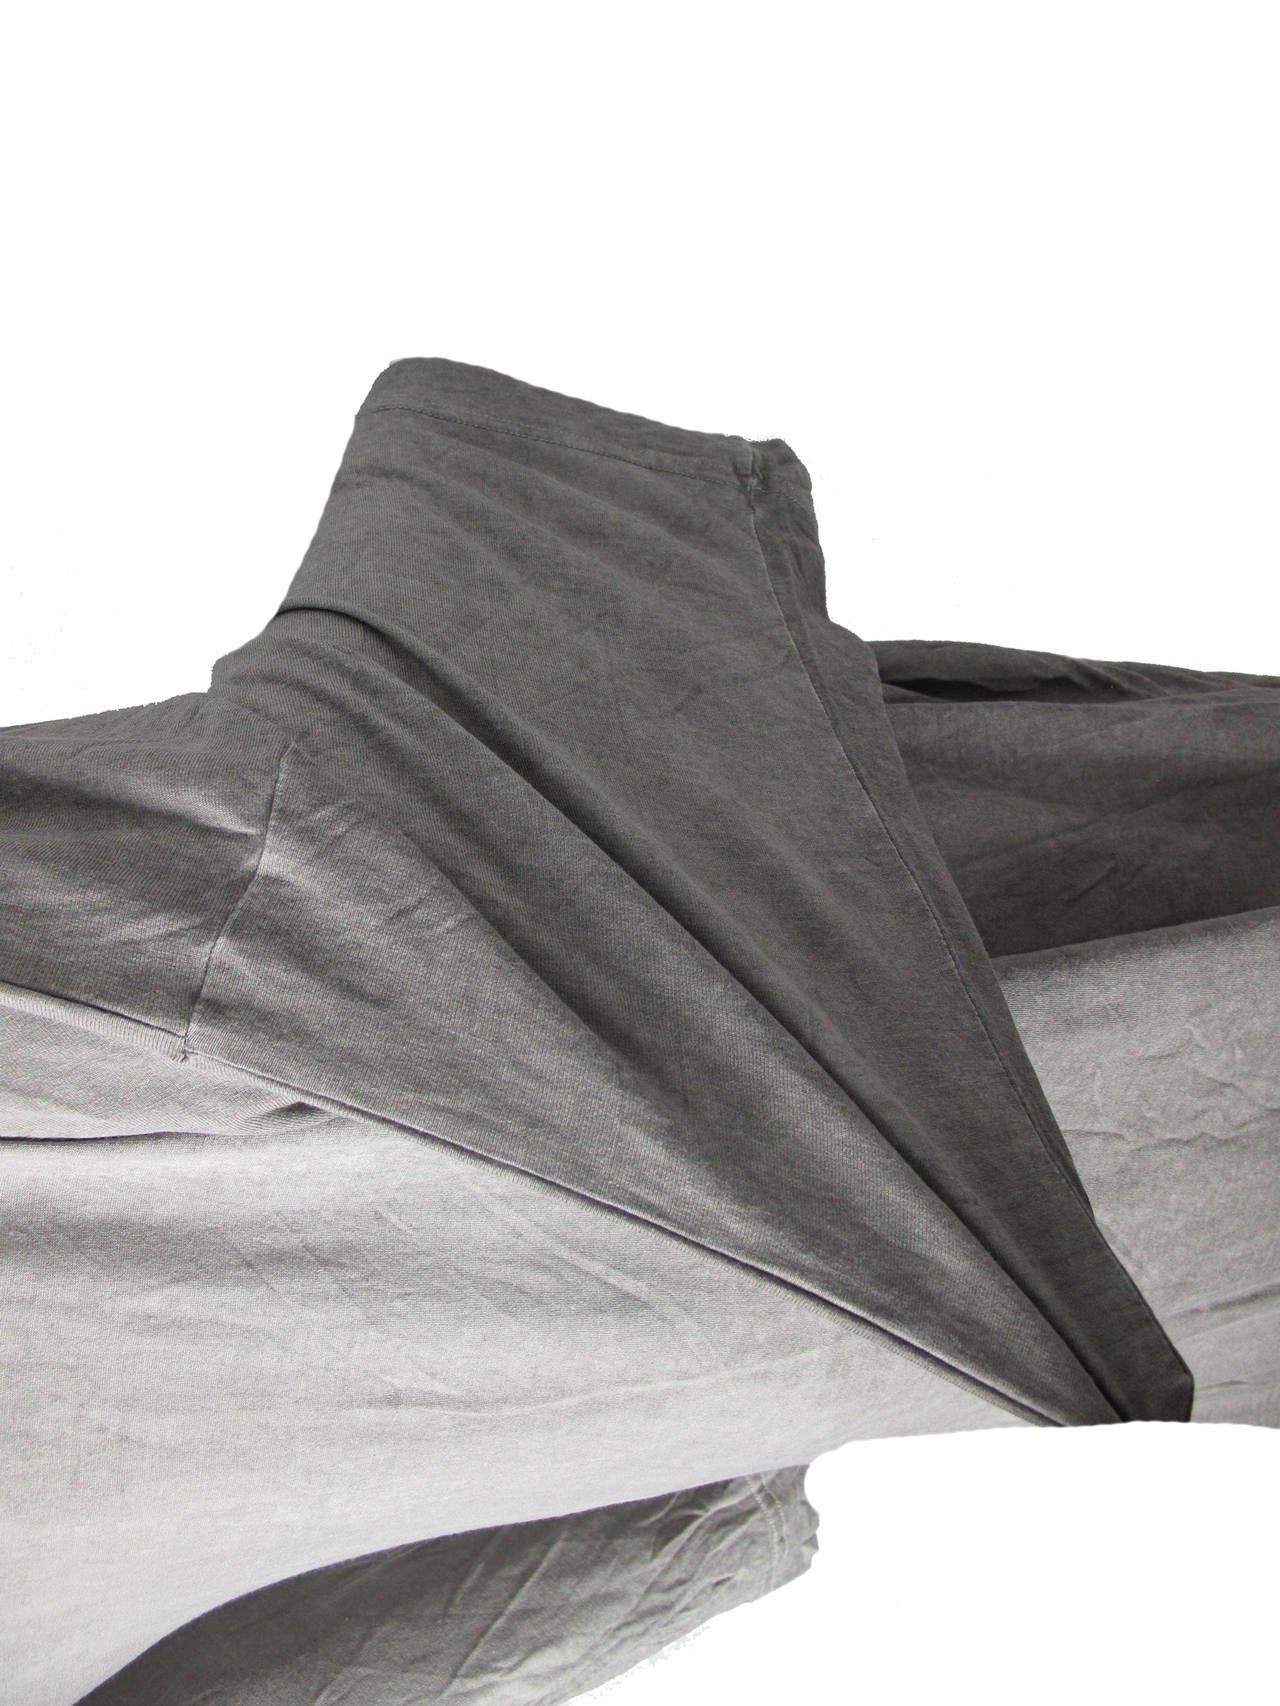 Vivienne Westwood Anglomania Grey Tee Shirt Dress 1